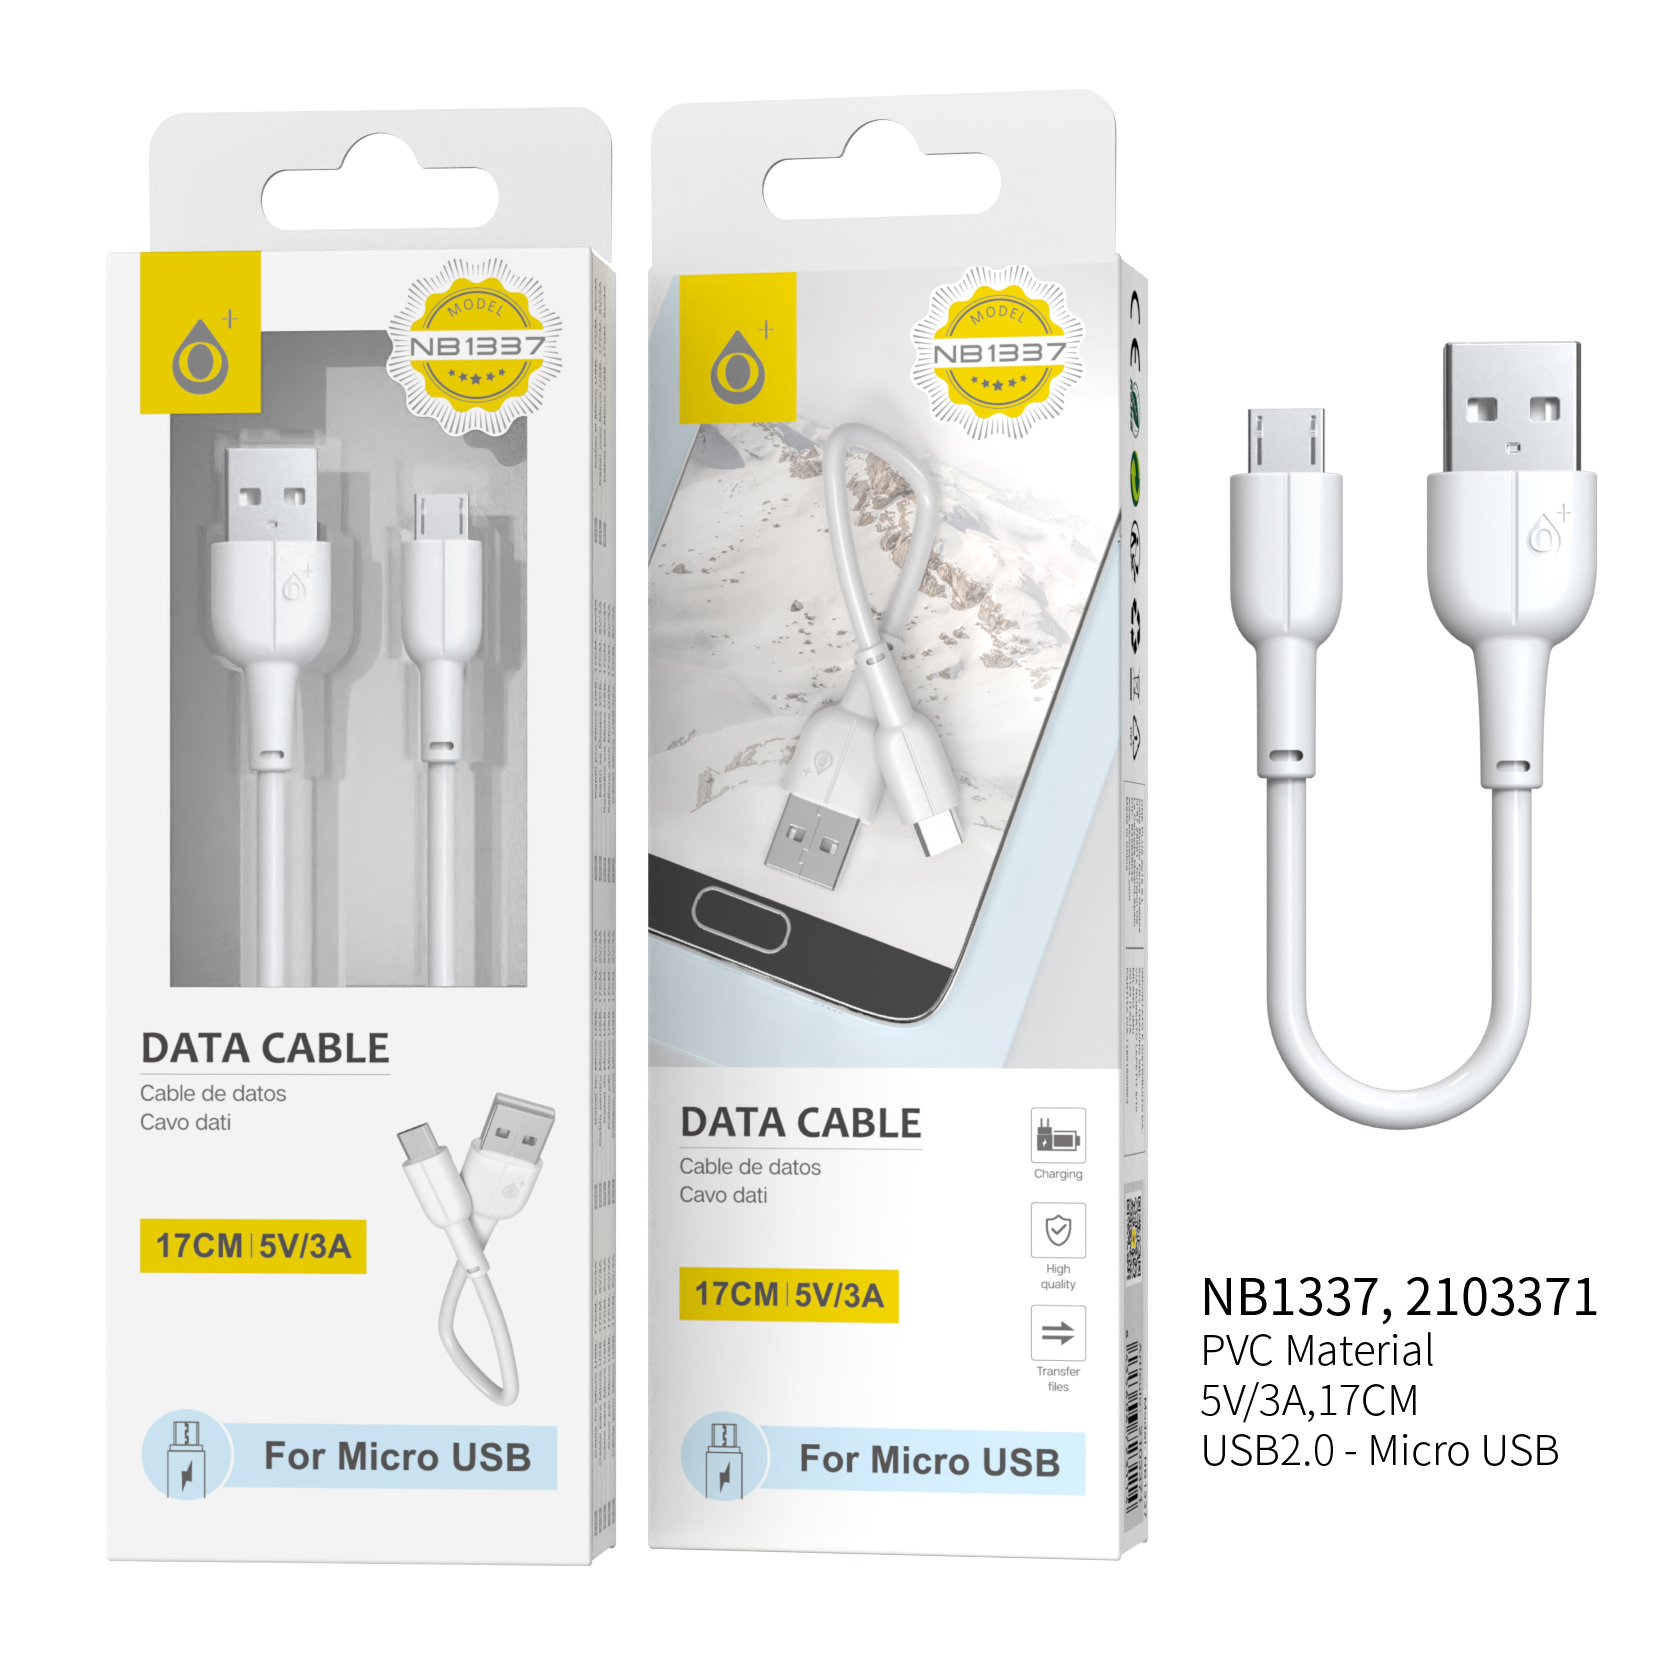 NB1337 BL Mini Cable de Datos para MicroUSB, 5/3A con Longitud 0.17CM, Blanco